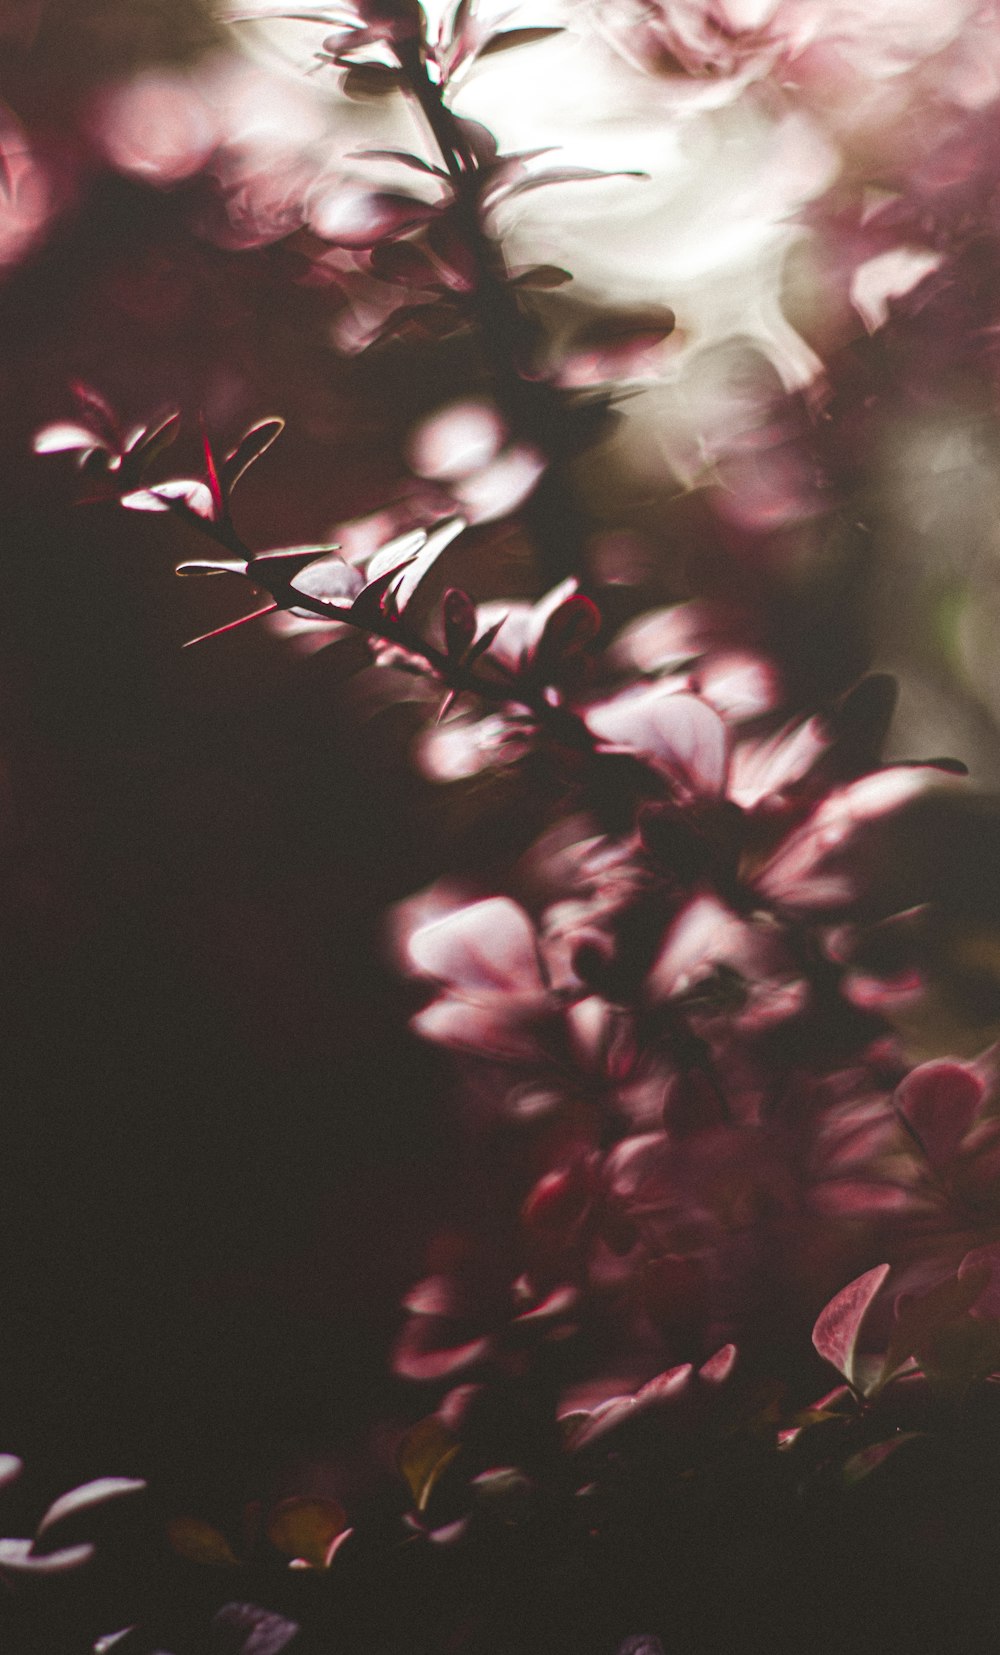 Fotografia de foco raso da planta rosa